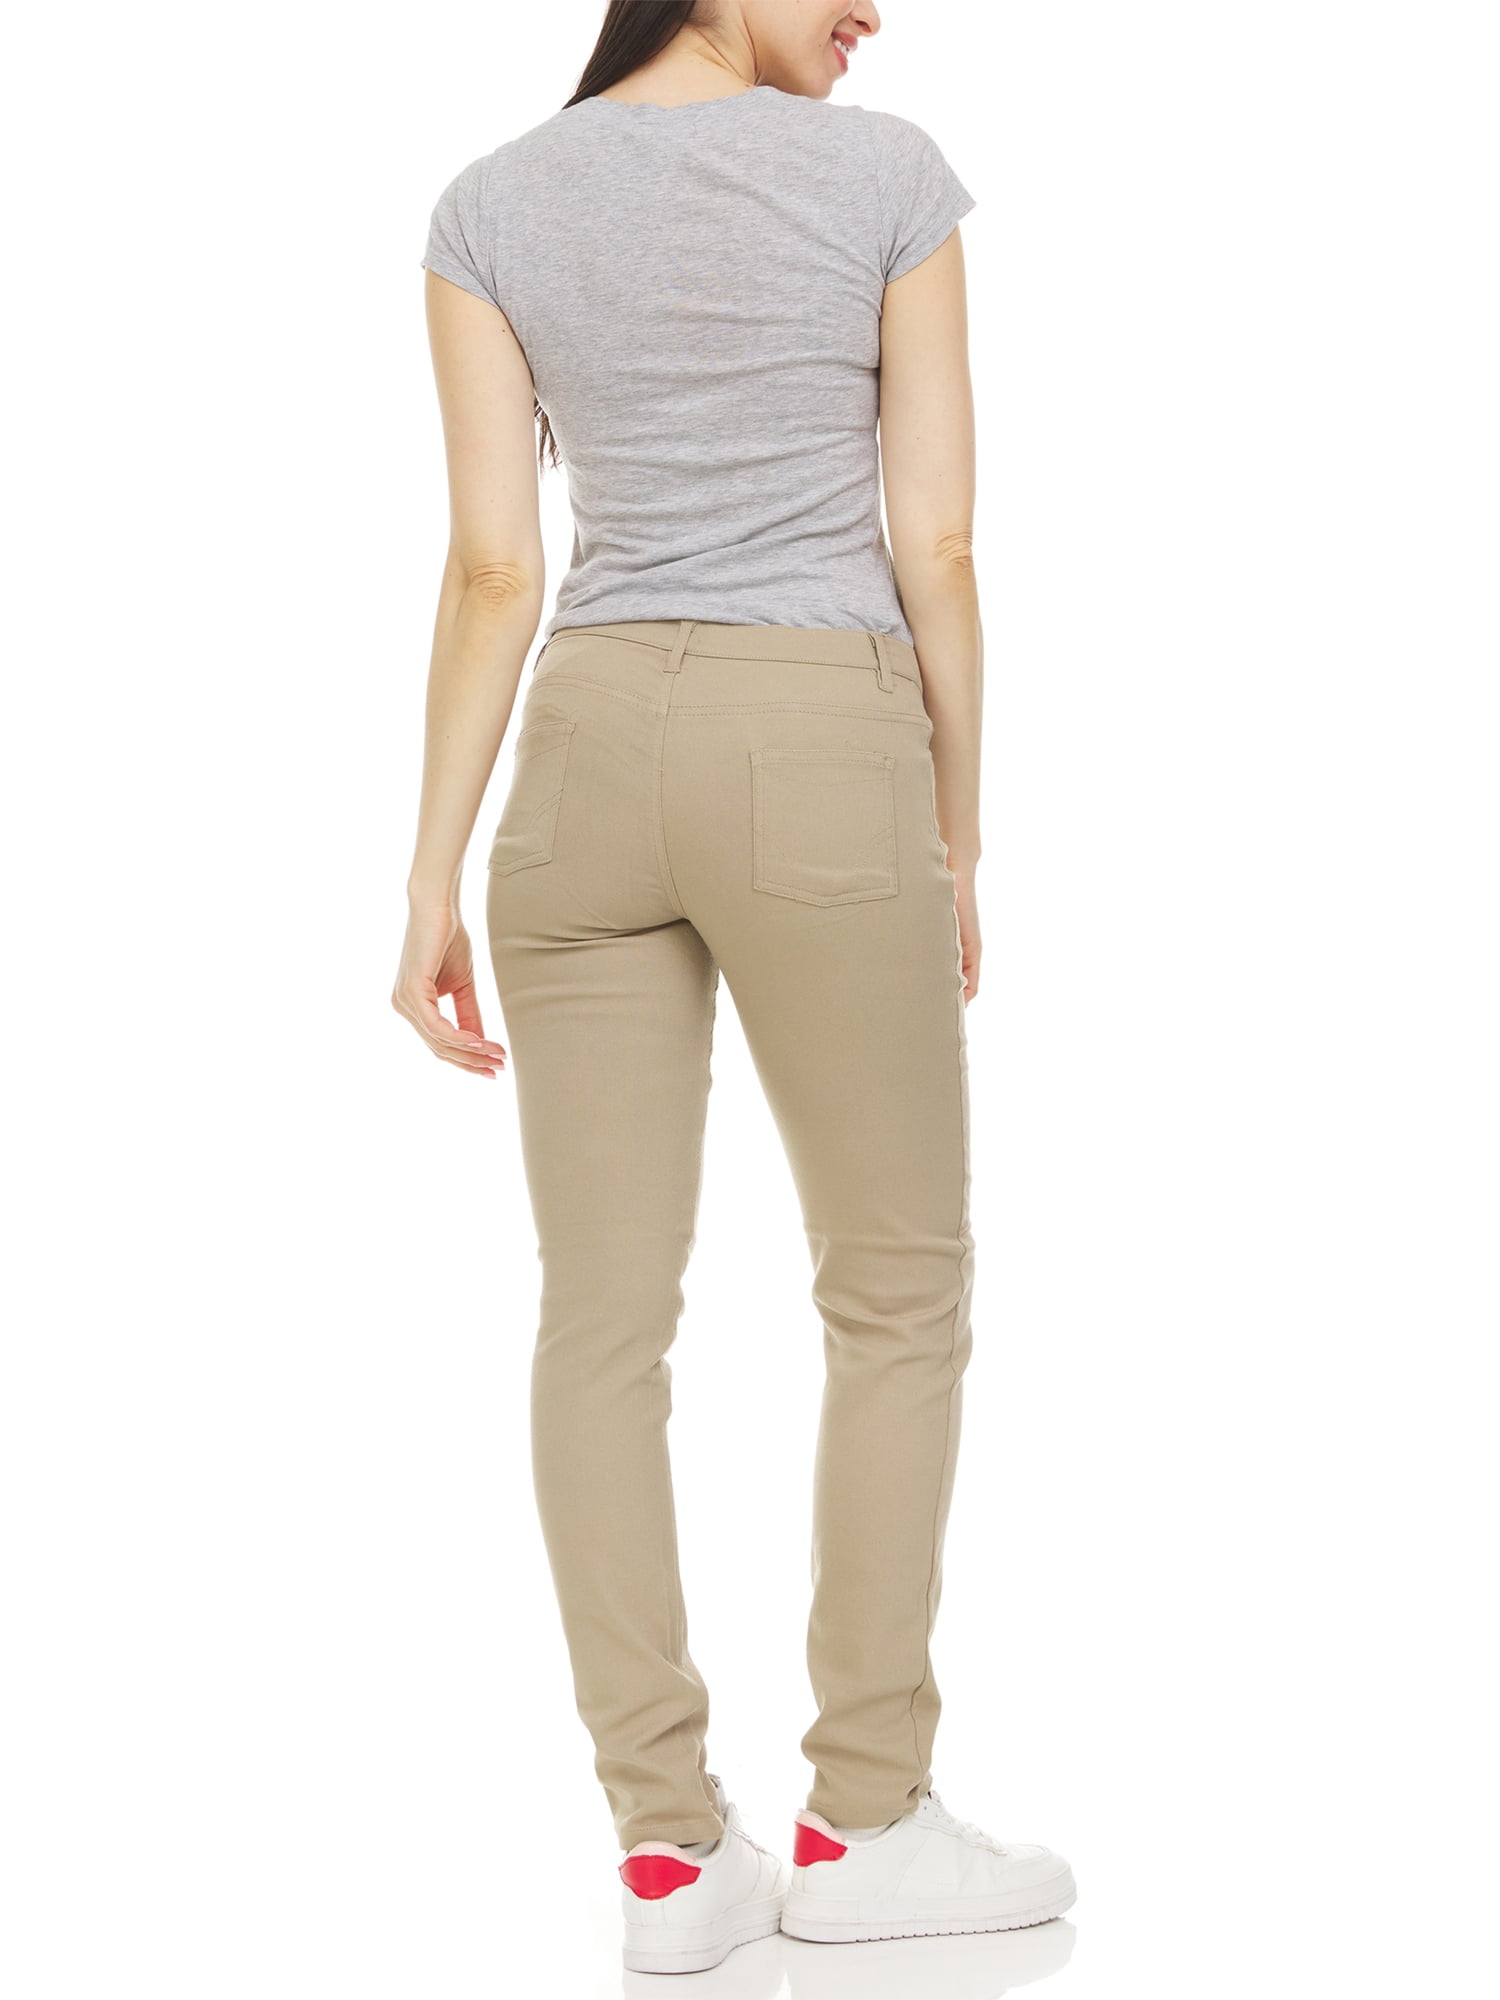 Women's Super Stretchy Skinny 5-Pocket Uniform Soft Chino Pants -  Walmart.com